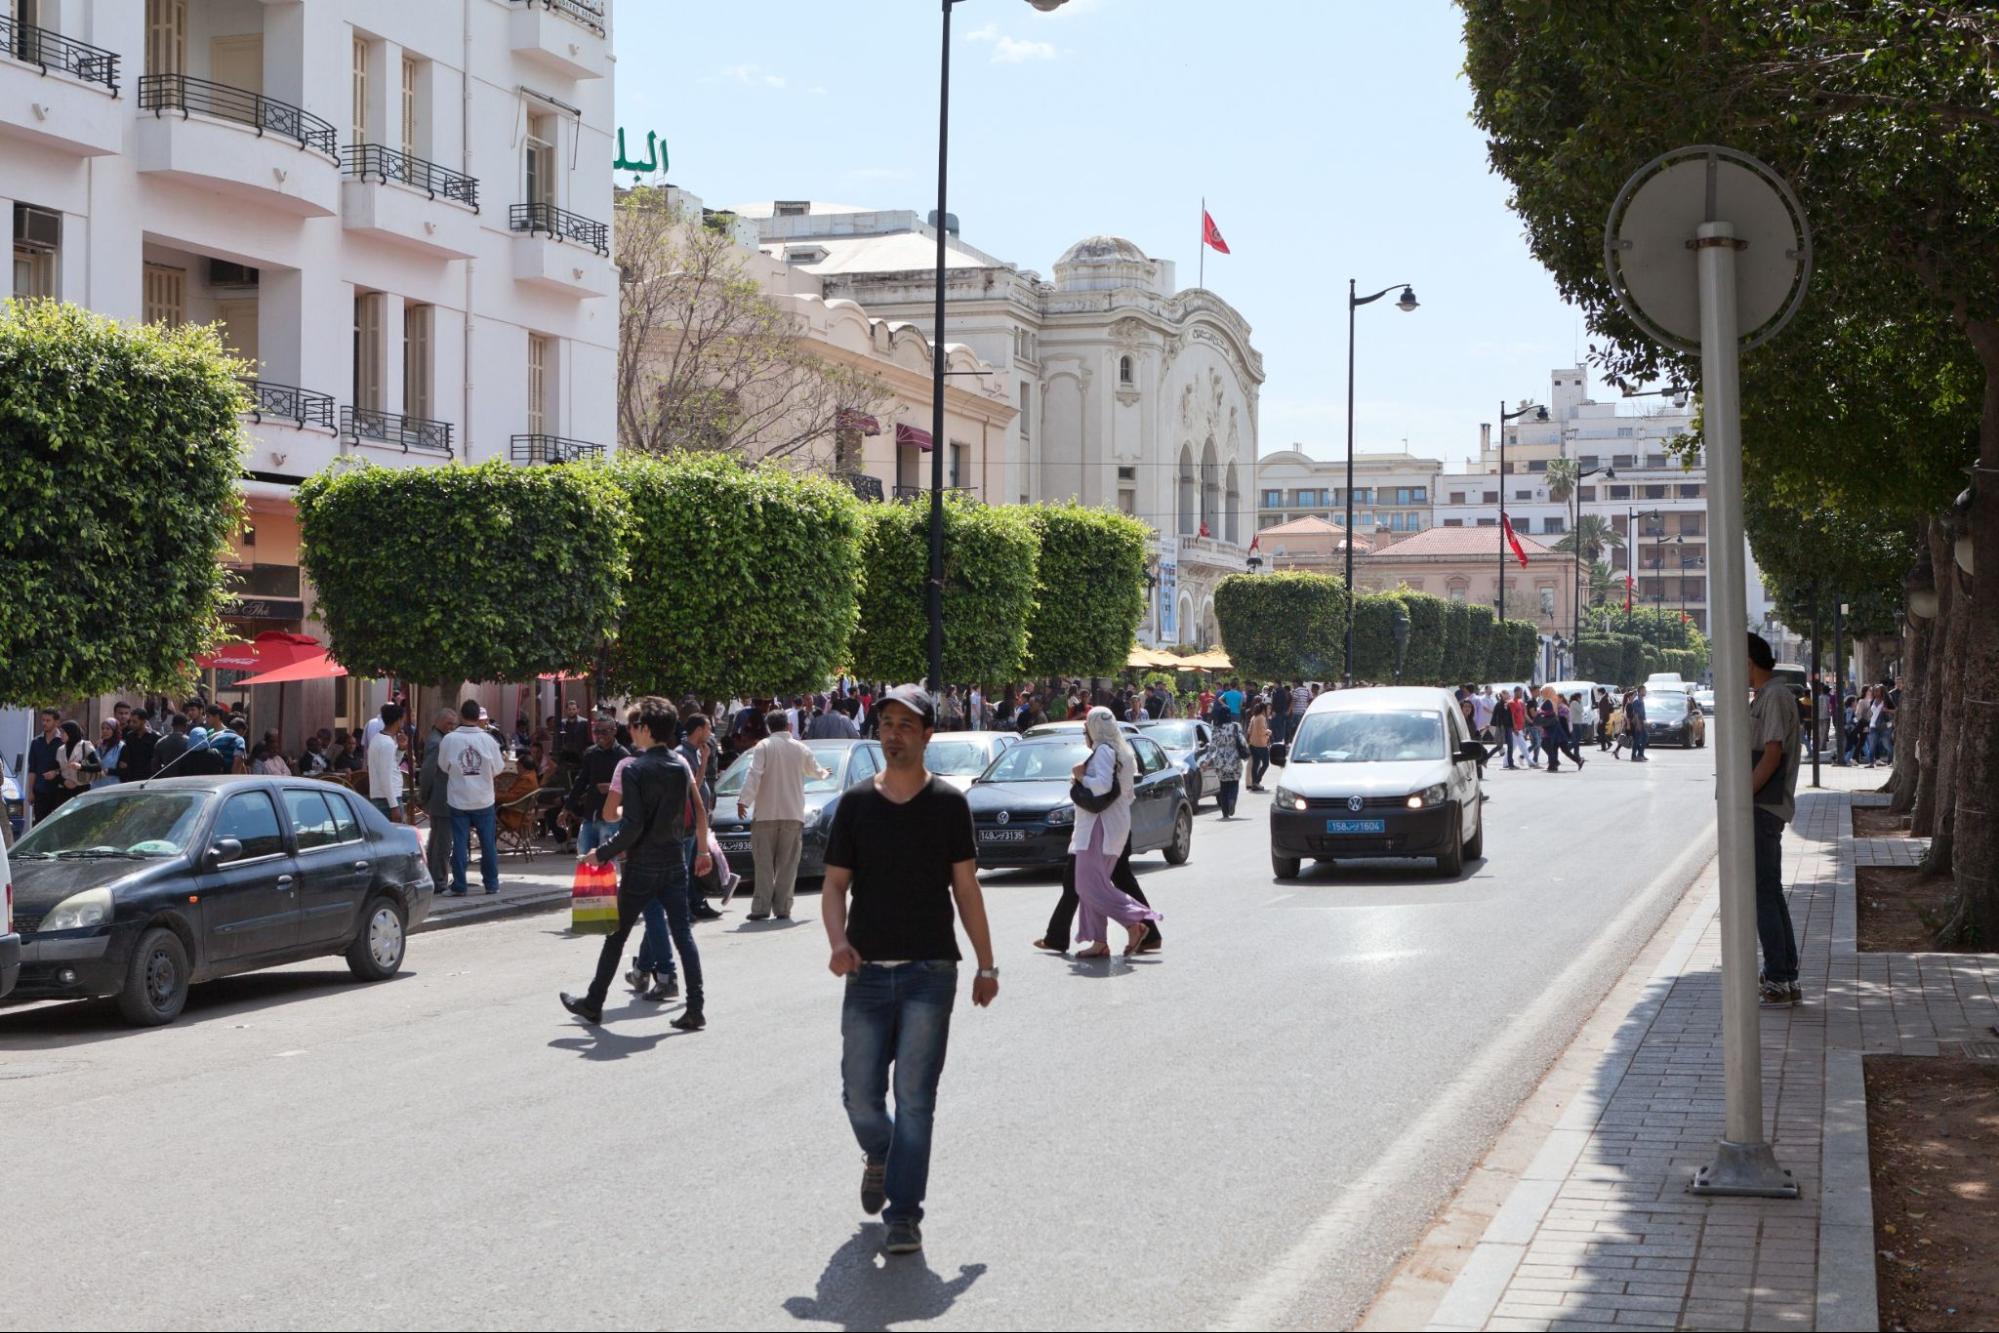 Main avenue Habib Bourguiba in Tunis capital of Tunisia